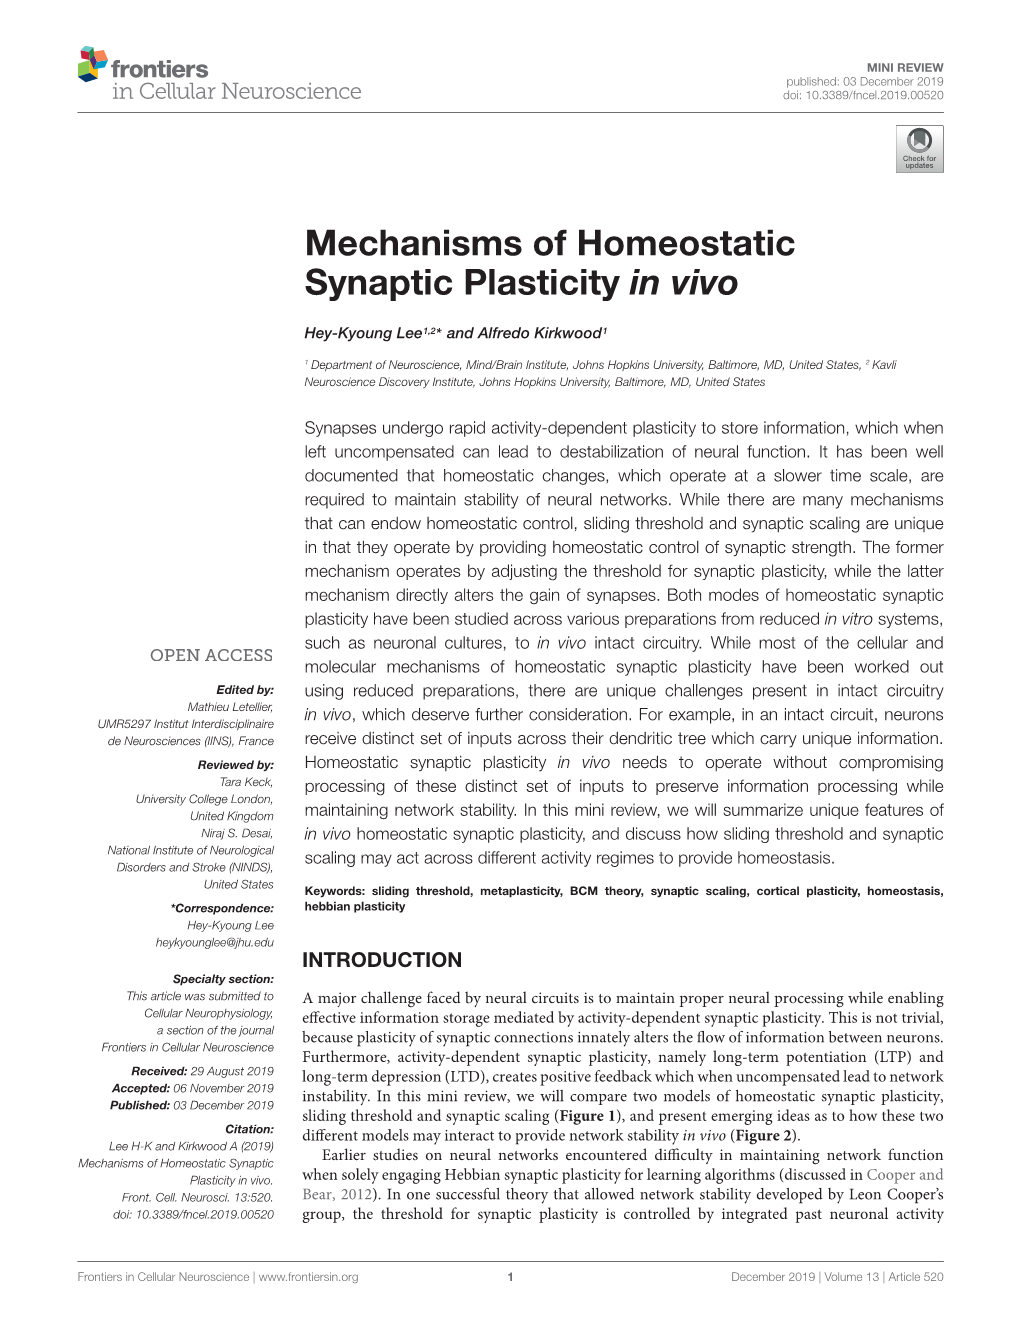 Mechanisms of Homeostatic Synaptic Plasticity in Vivo